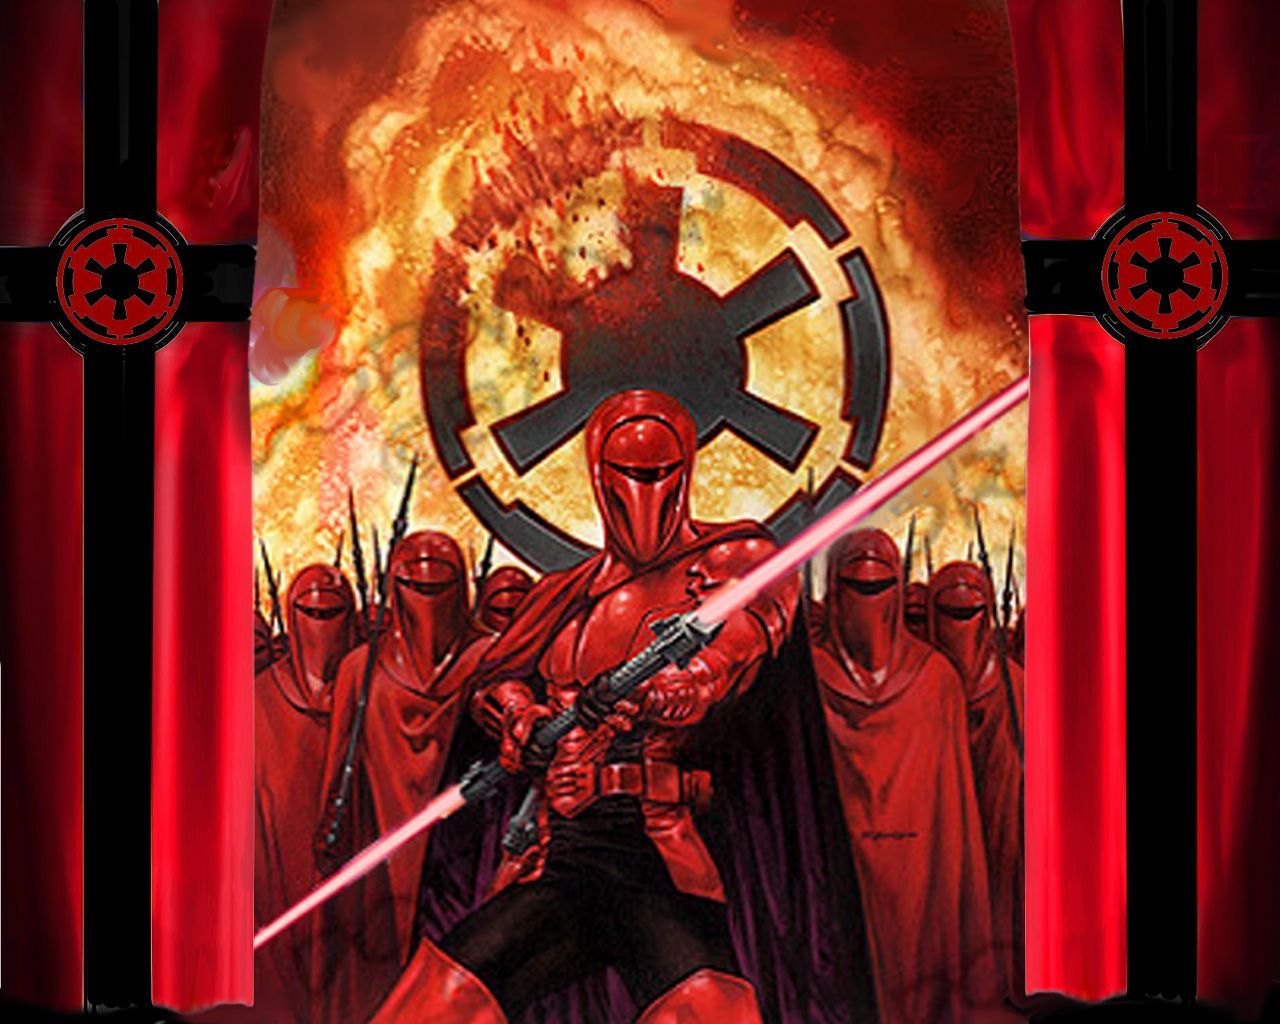 Crimson Empire Wallpaper. Star wars wallpaper, Star wars fan art, Star wars artwork